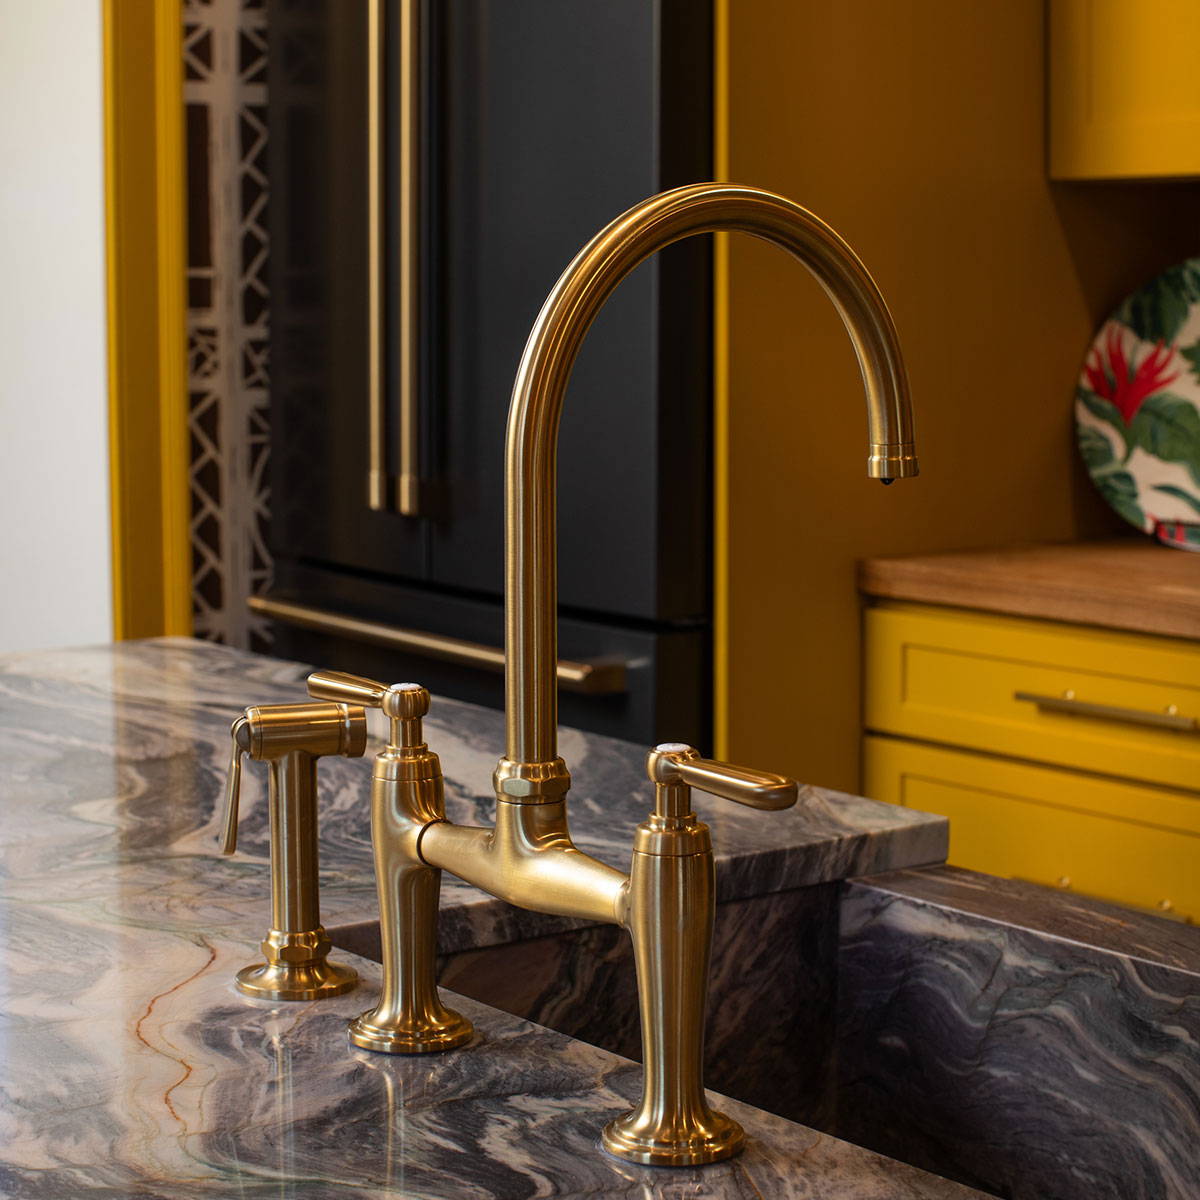 Kohler faucet in Vibrant Brushed Moderne Brass with matching Cafe Brushed Brass hardware in background